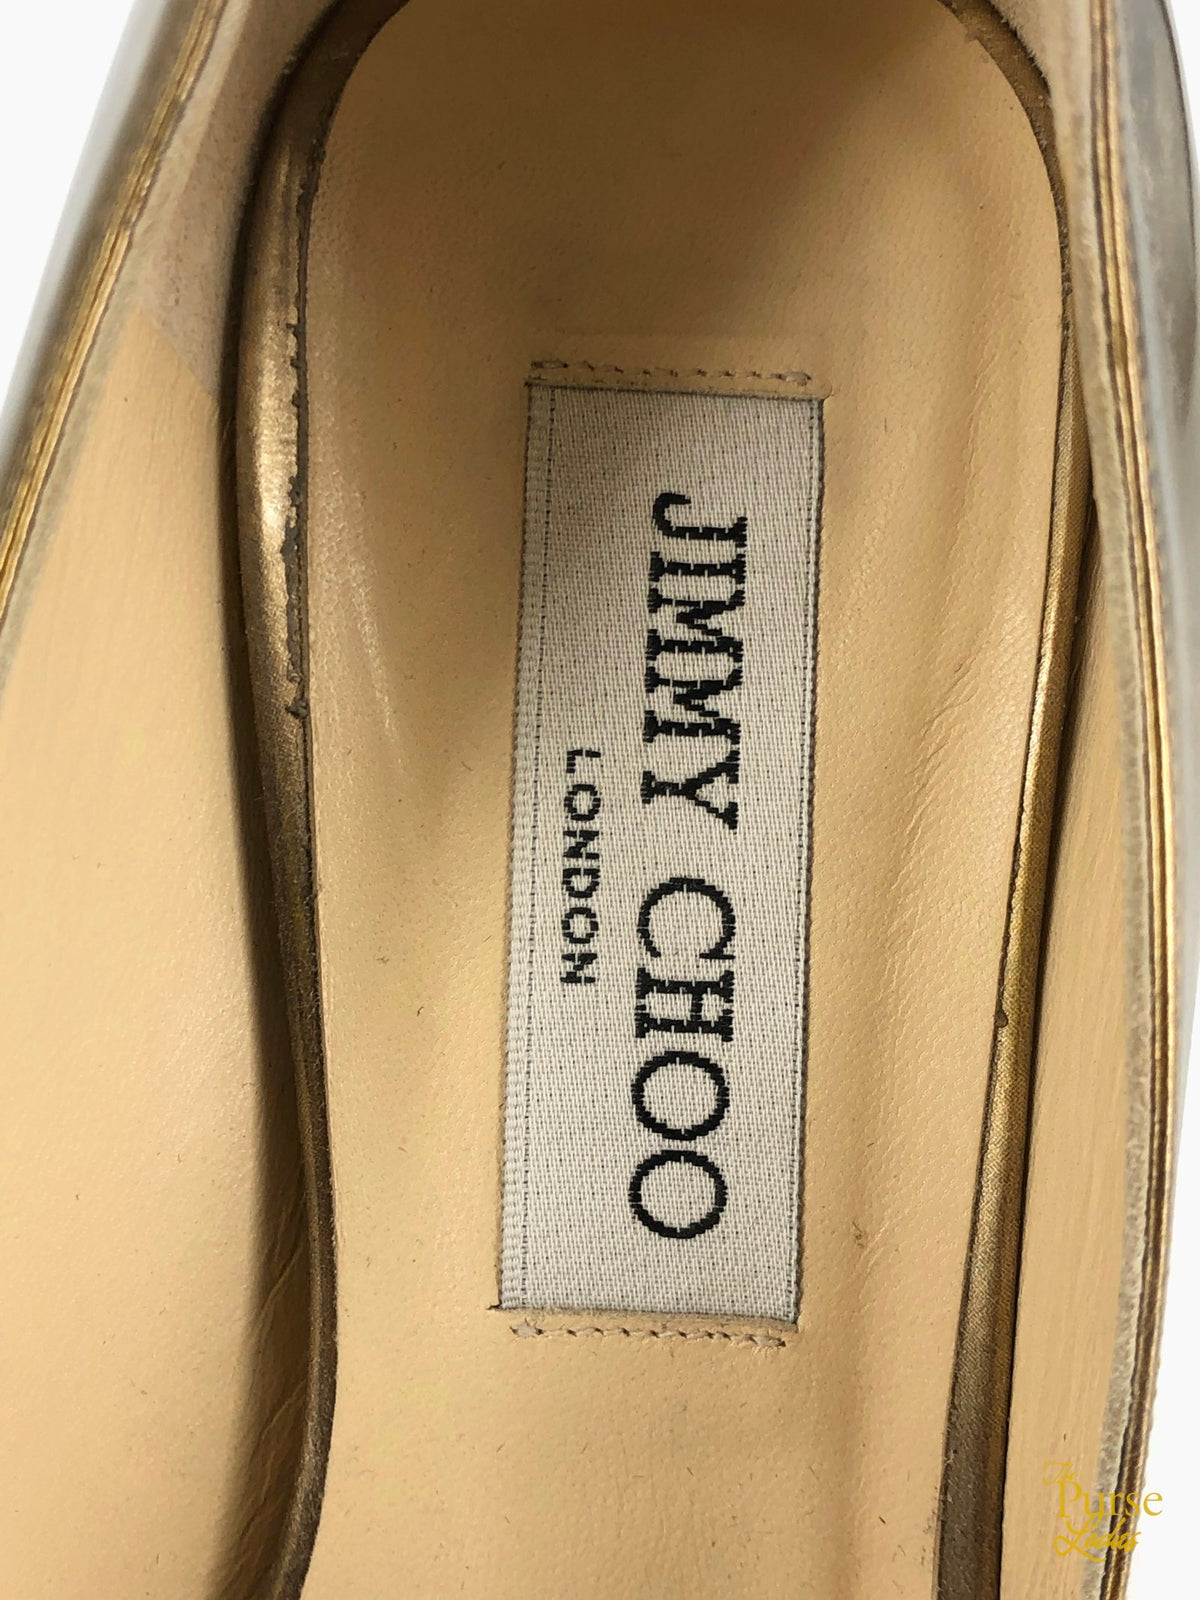 JIMMY CHOO Gold Metallic Leather Crown Peep Toe Pumps SZ 36.5